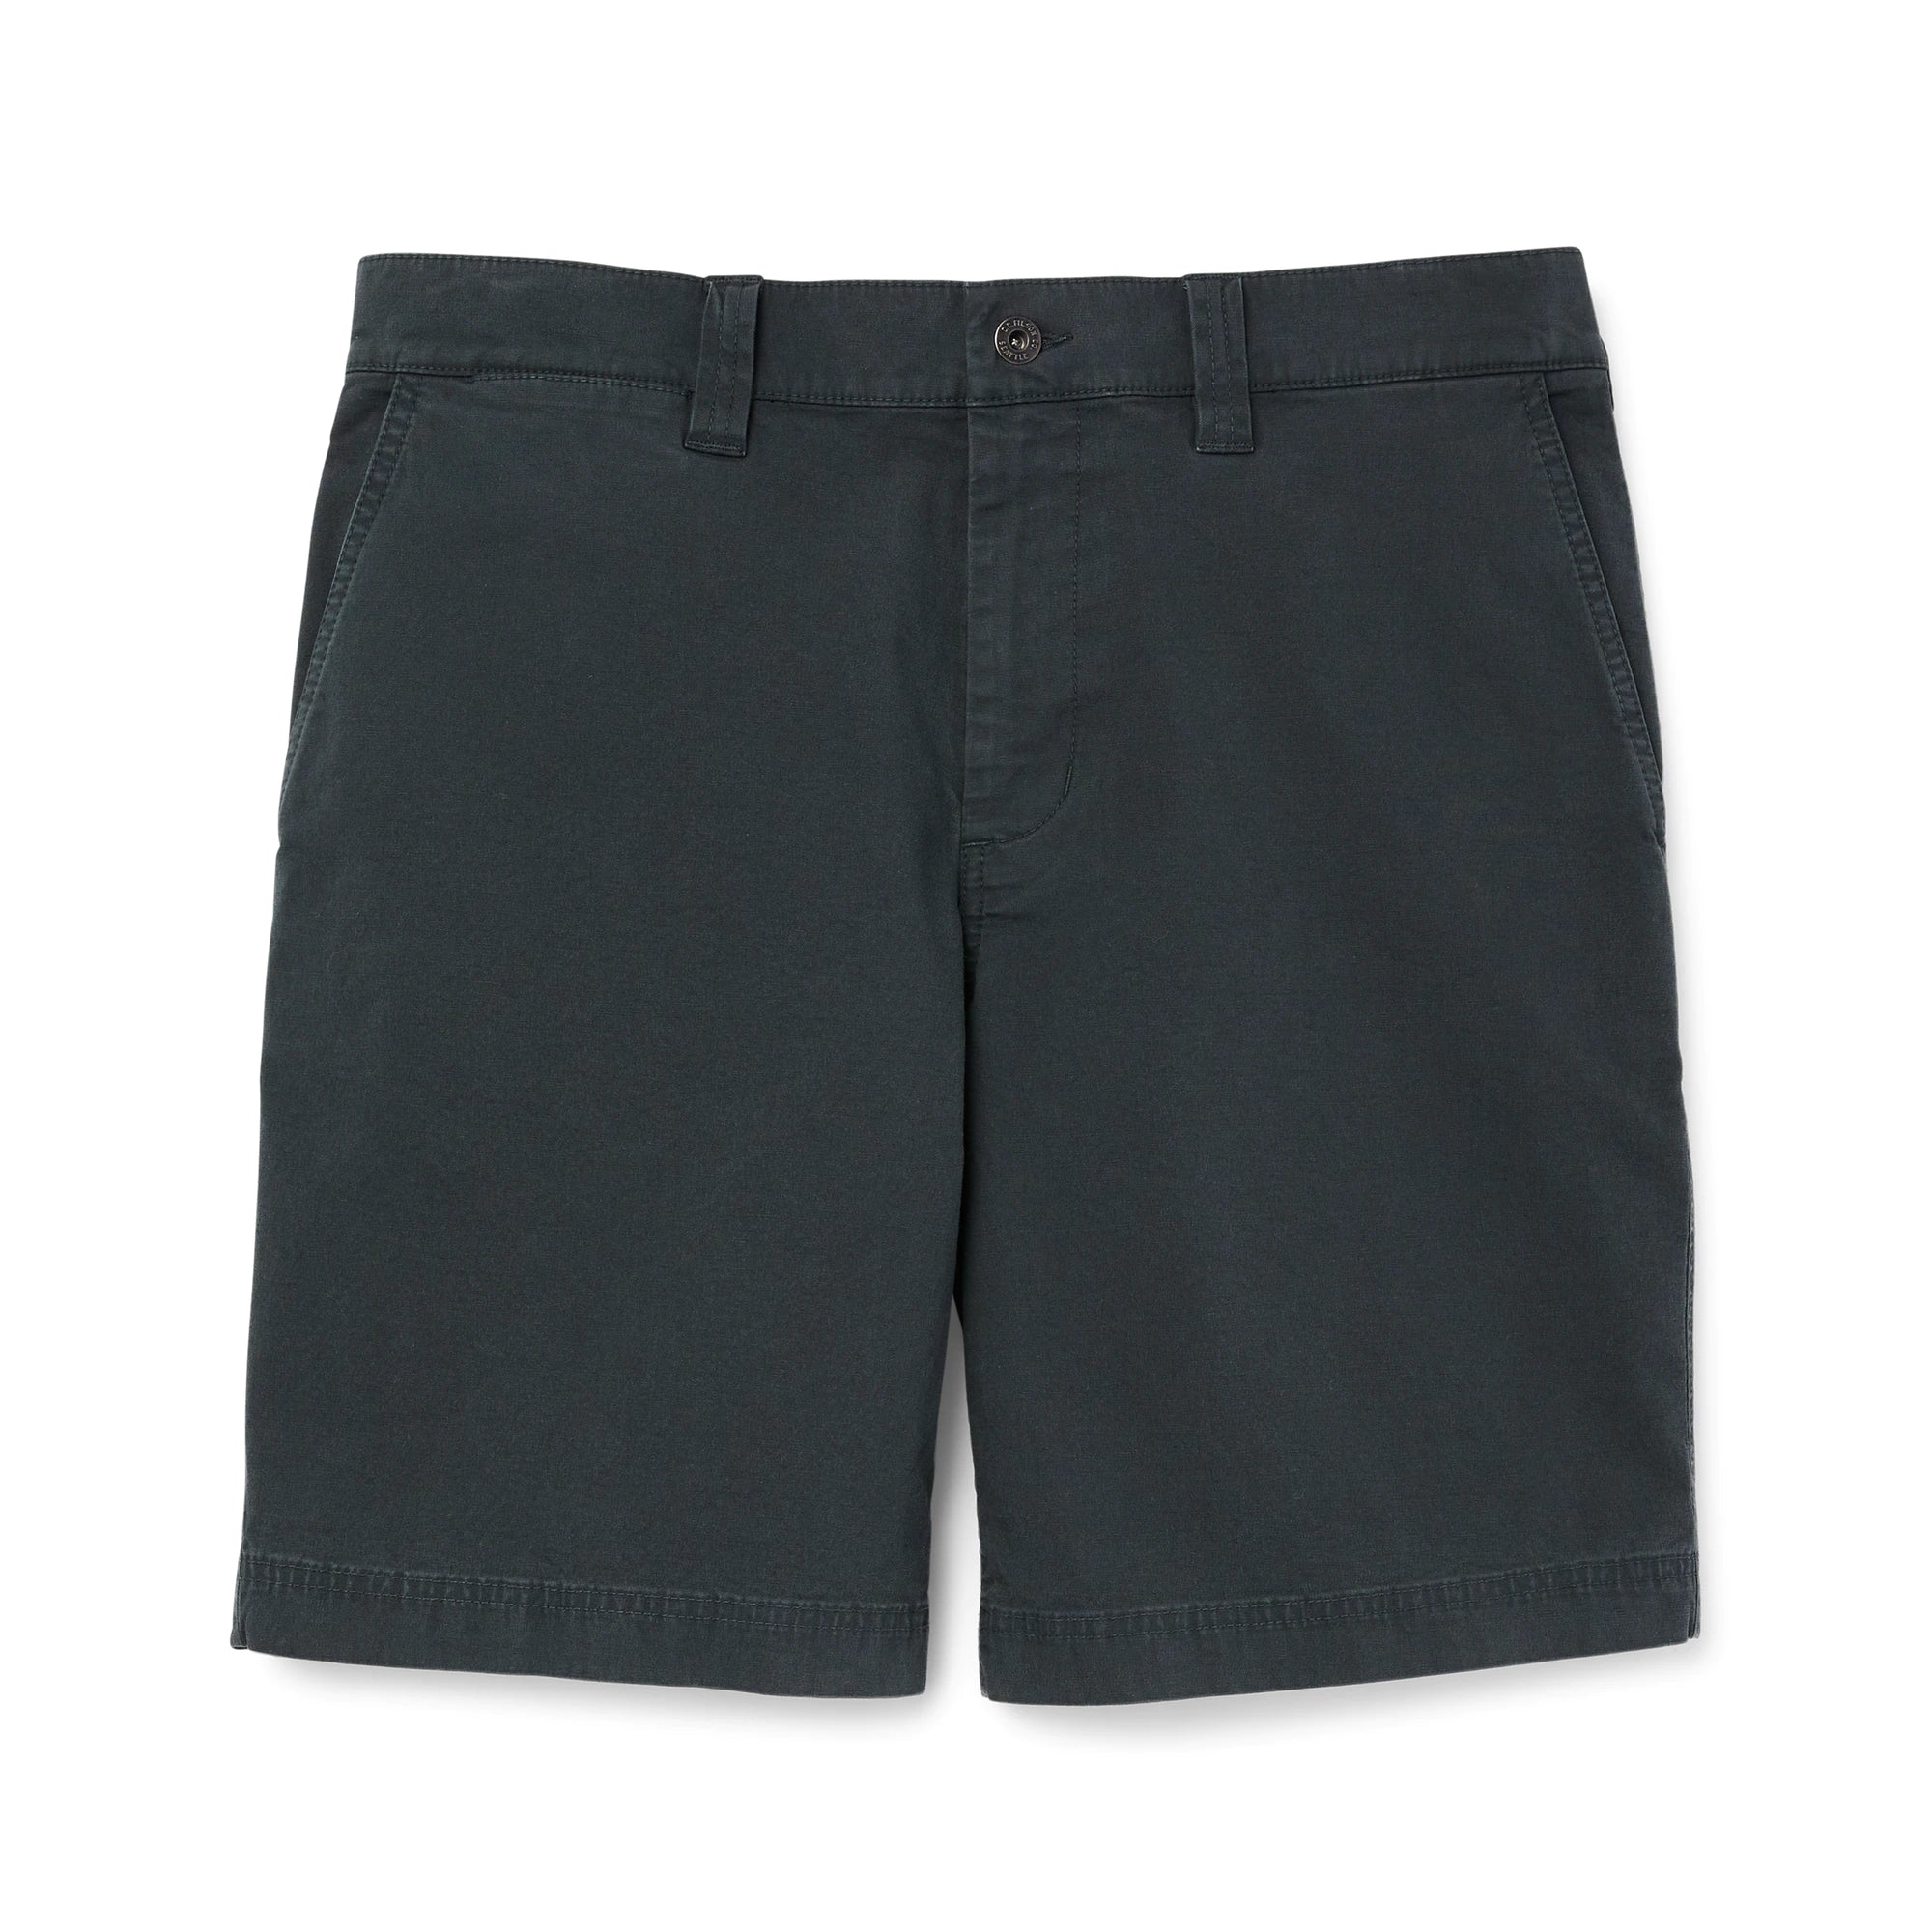 Granite Mountain 9" Shorts